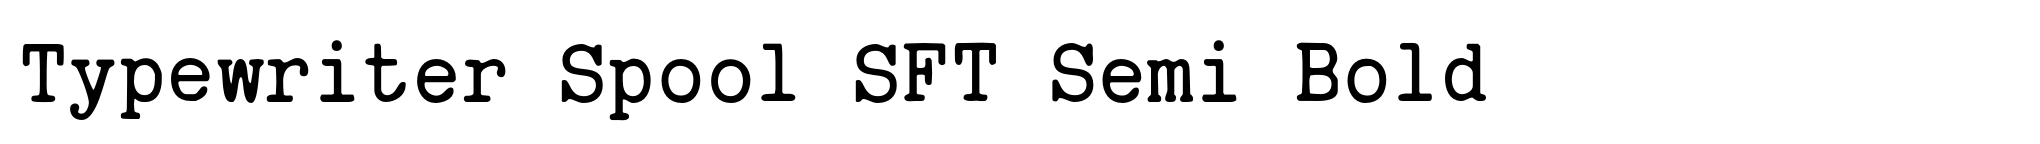 Typewriter Spool SFT Semi Bold image